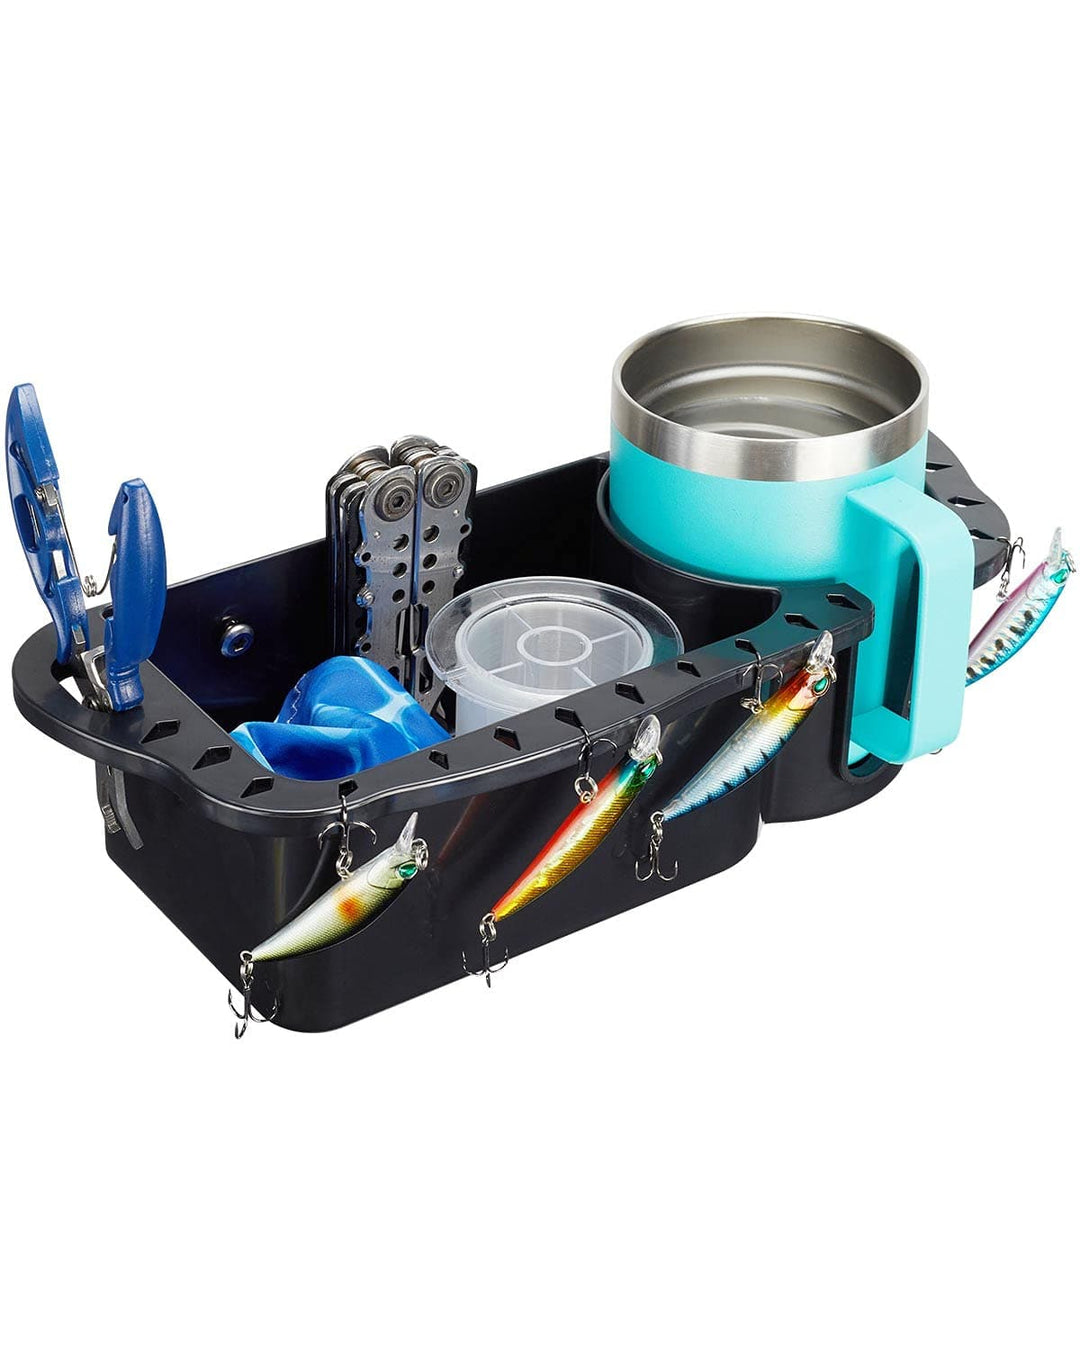 Fishing Seat Box Universal Cup Holder & Tray